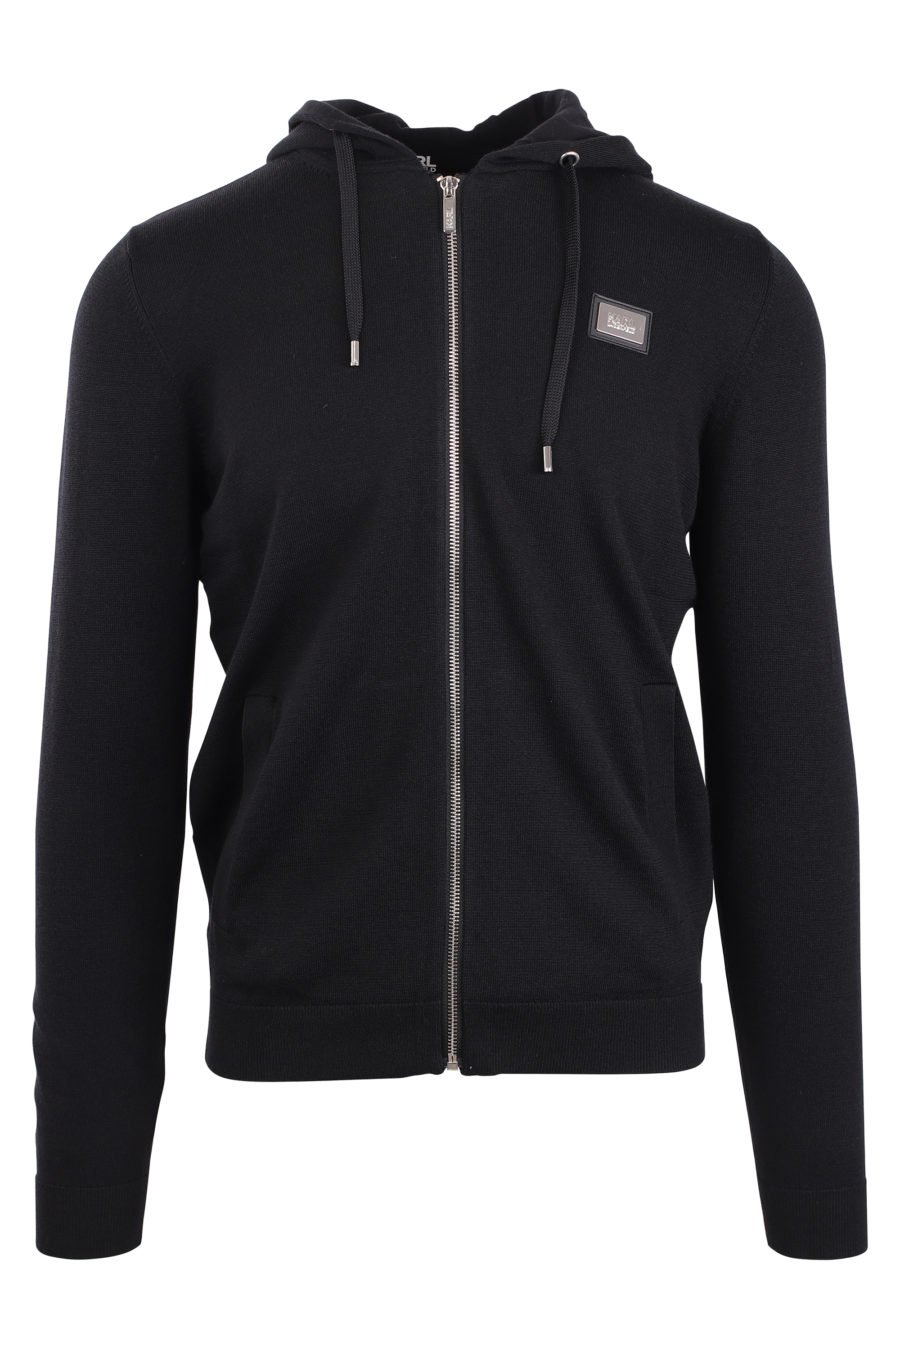 Black jacket with hood and small logo - IMG 0926